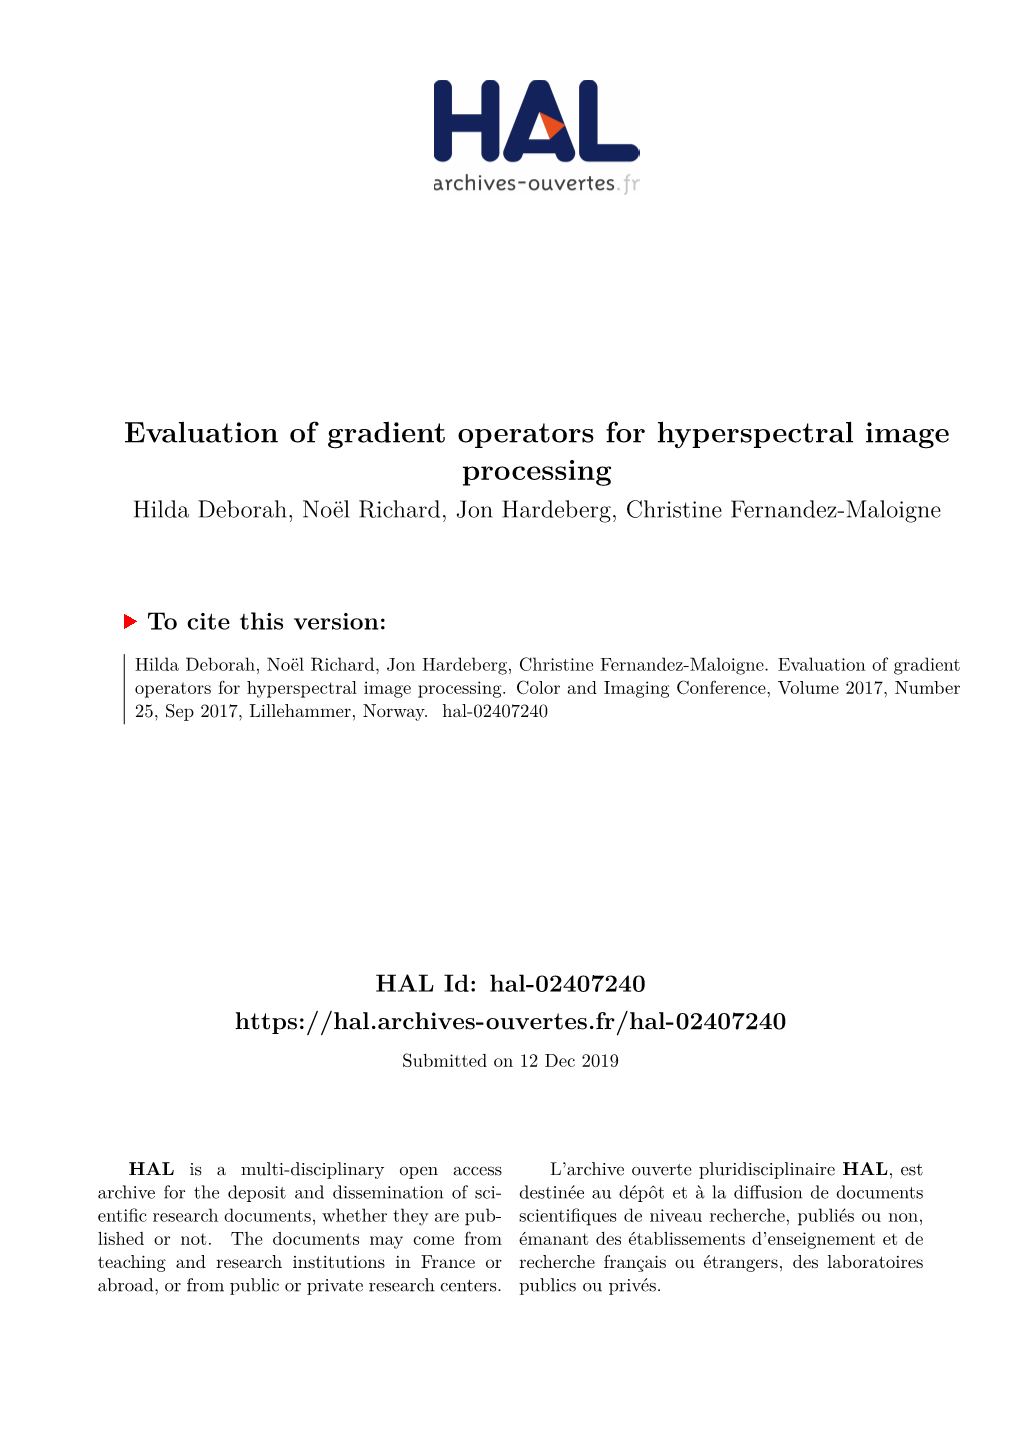 Evaluation of Gradient Operators for Hyperspectral Image Processing Hilda Deborah, Noël Richard, Jon Hardeberg, Christine Fernandez-Maloigne